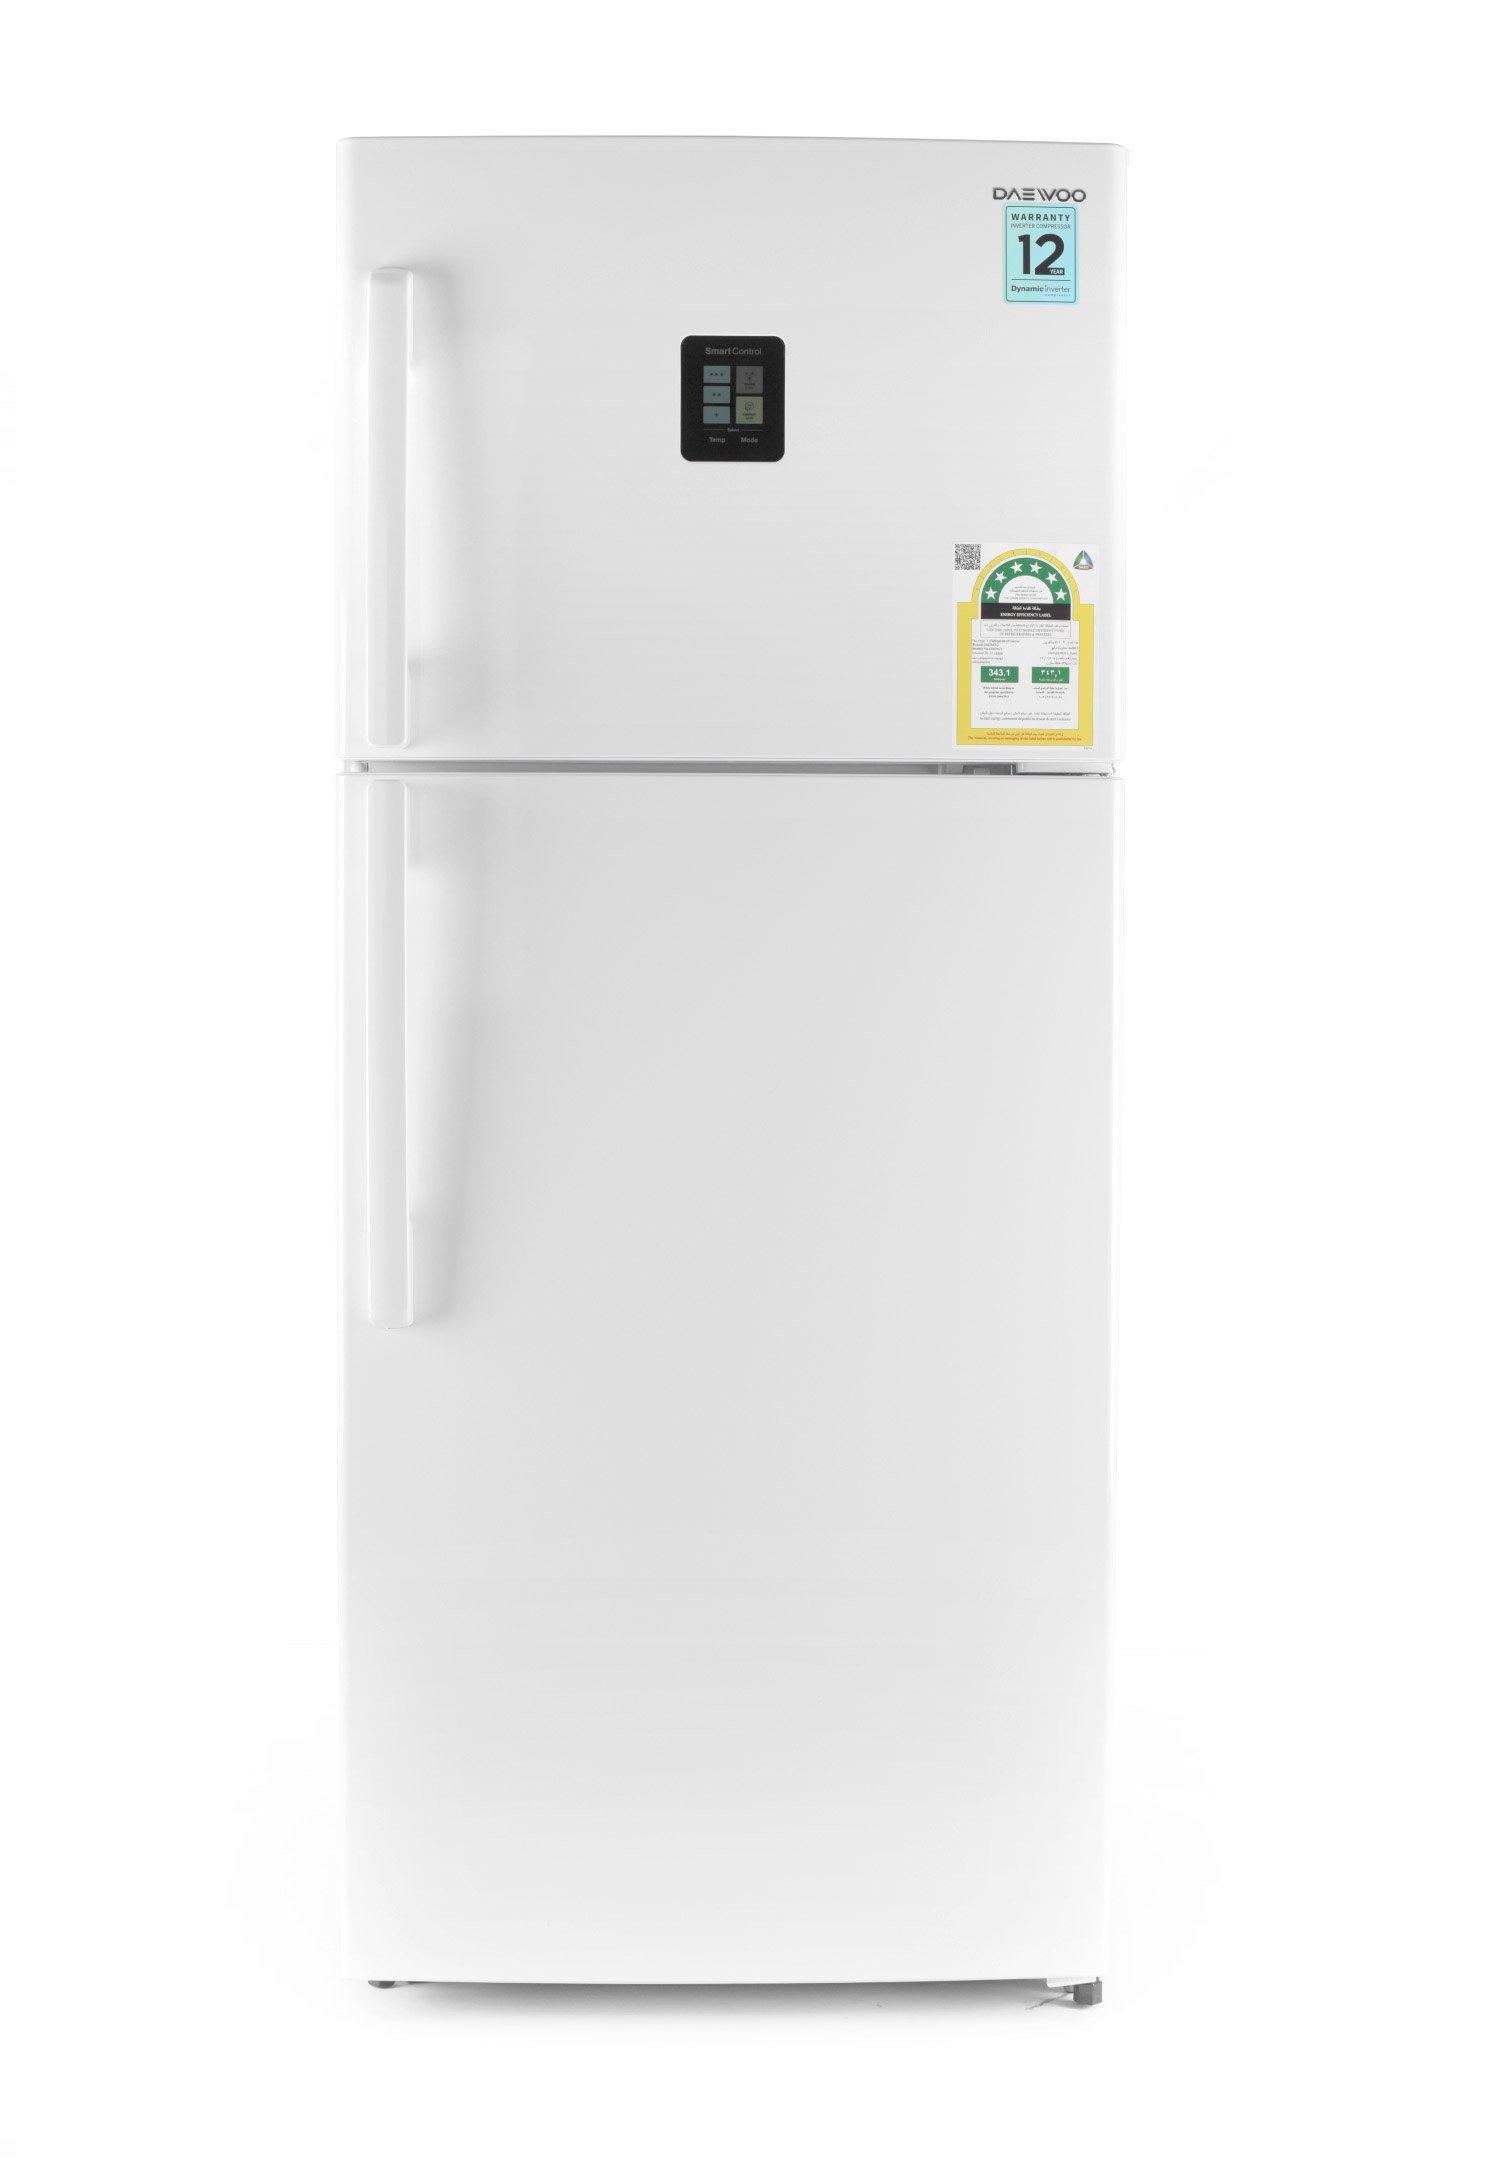 45++ Daewoo refrigerator not making ice ideas in 2021 